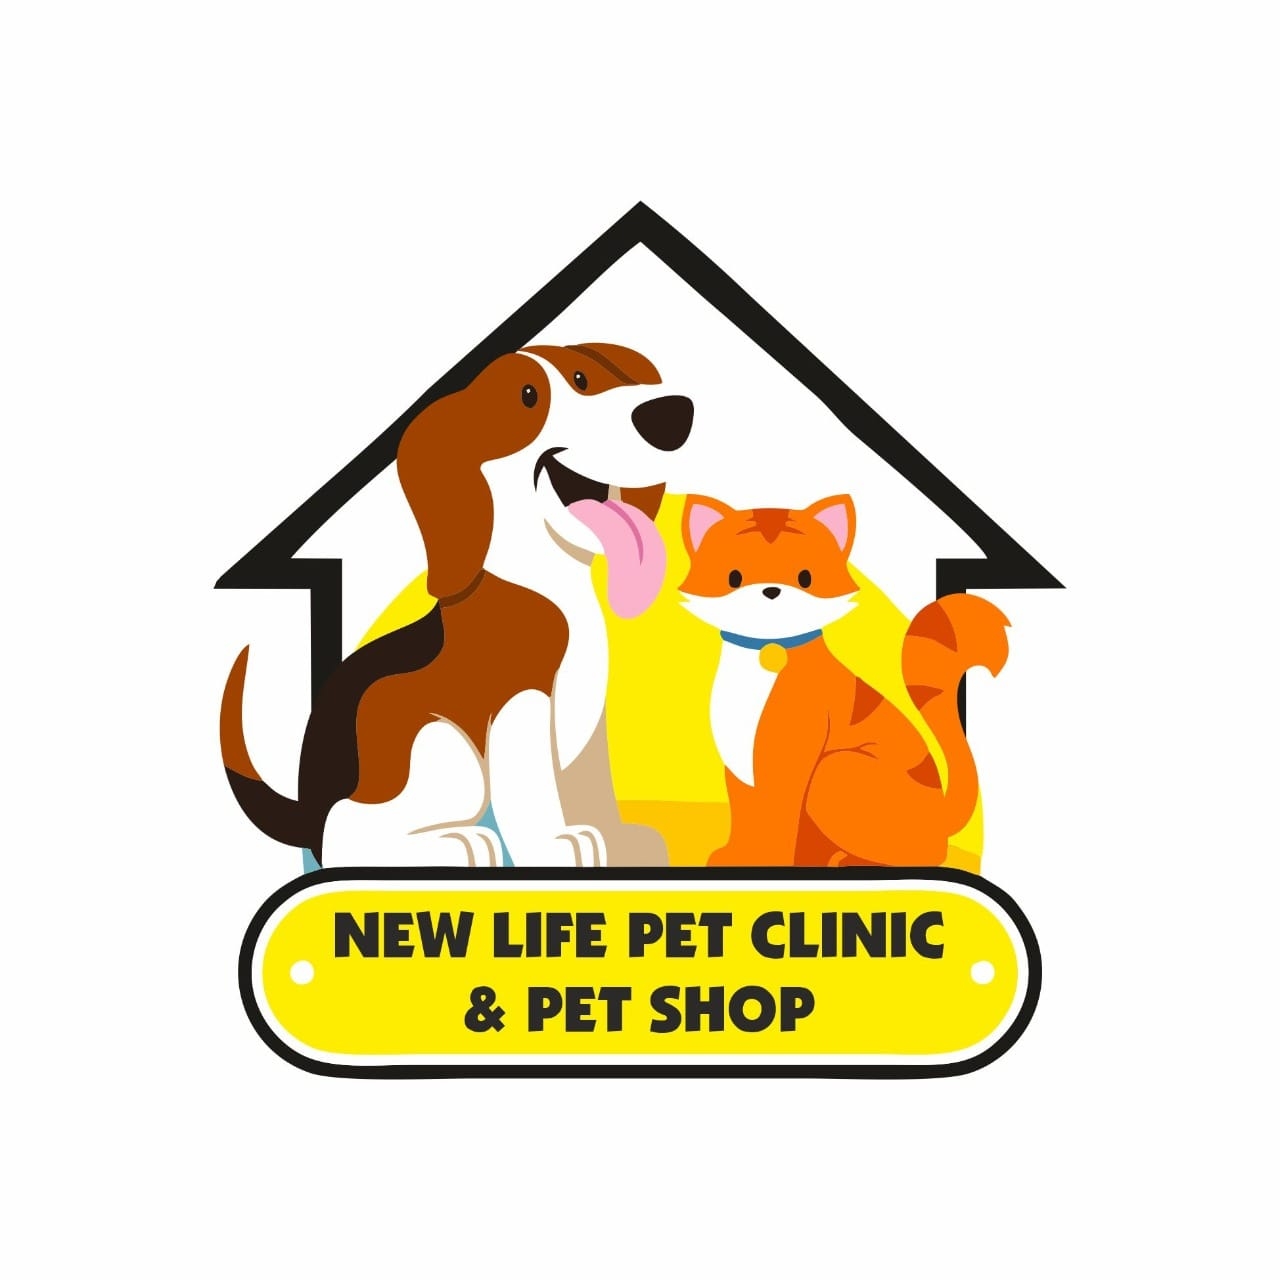 New life pet clinic & pet shop|Healthcare|Medical Services